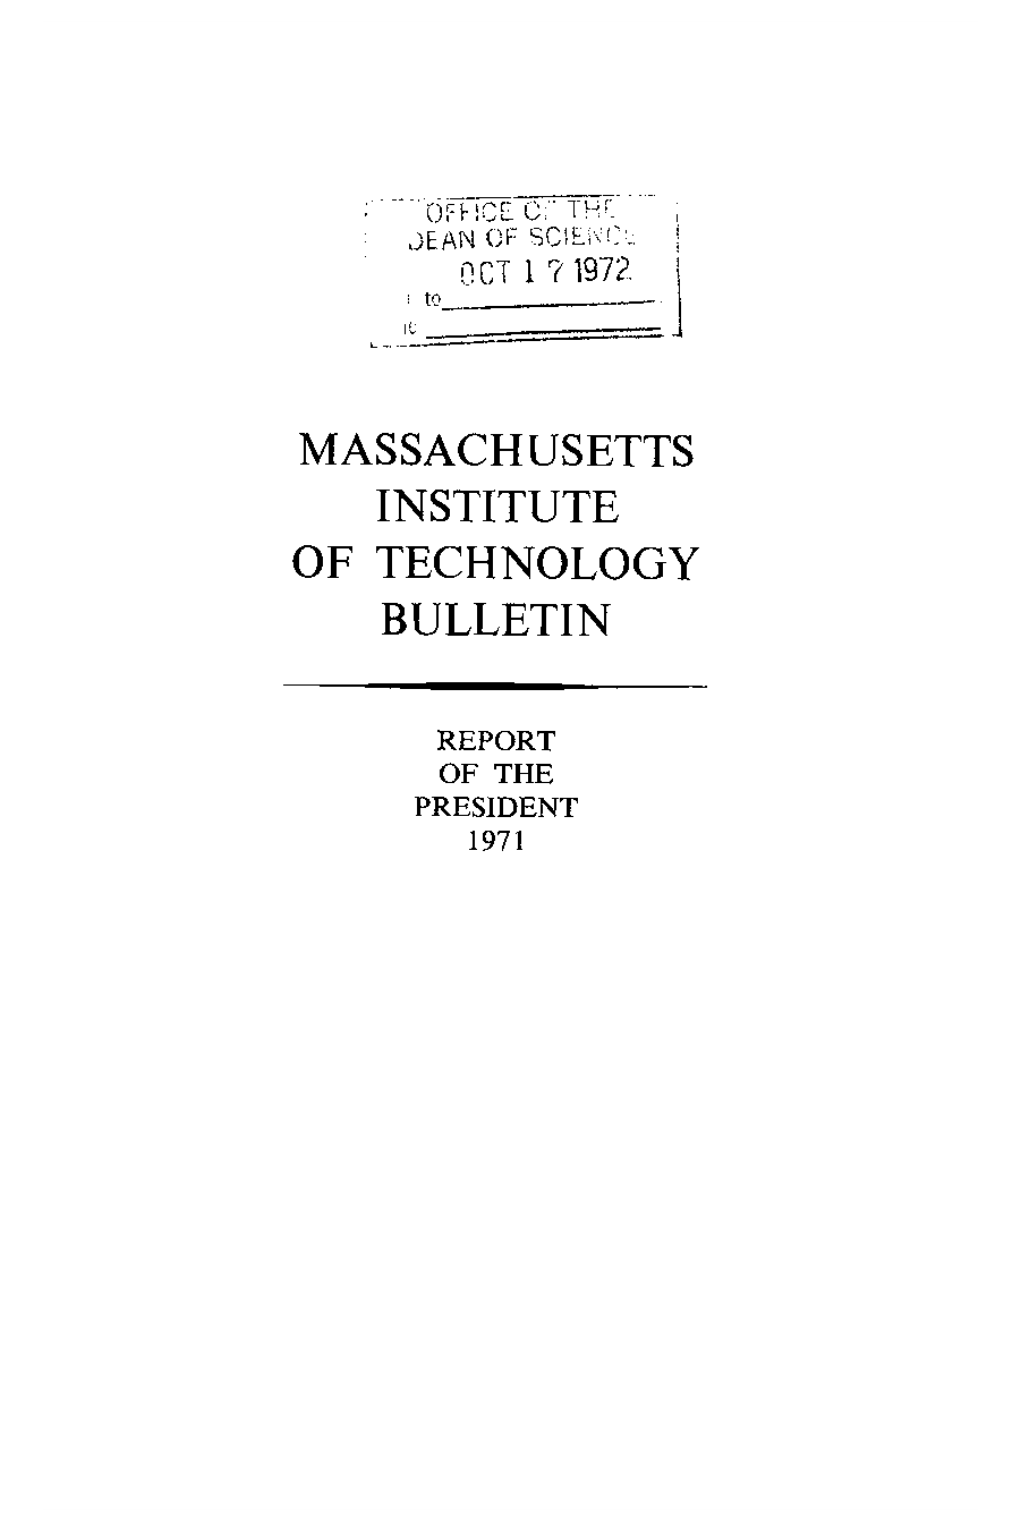 Massachusetts Institute of Technology Bulletin